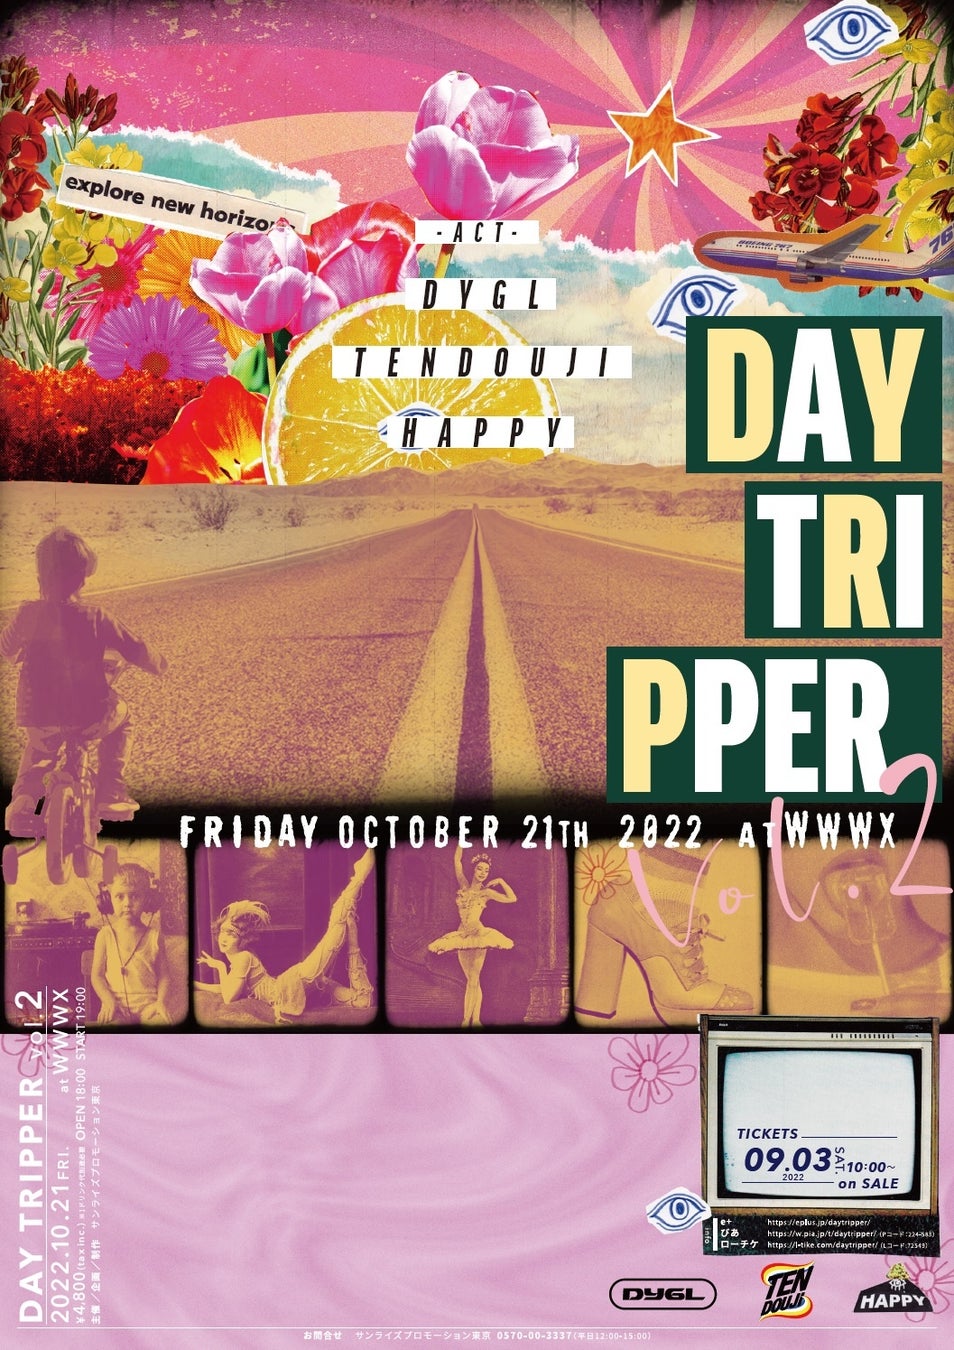 DYGL、TENDOUJI、HAPPYが出演音楽イベント「Day Tripper Vol.2」10/21(金)開催のサブ画像1